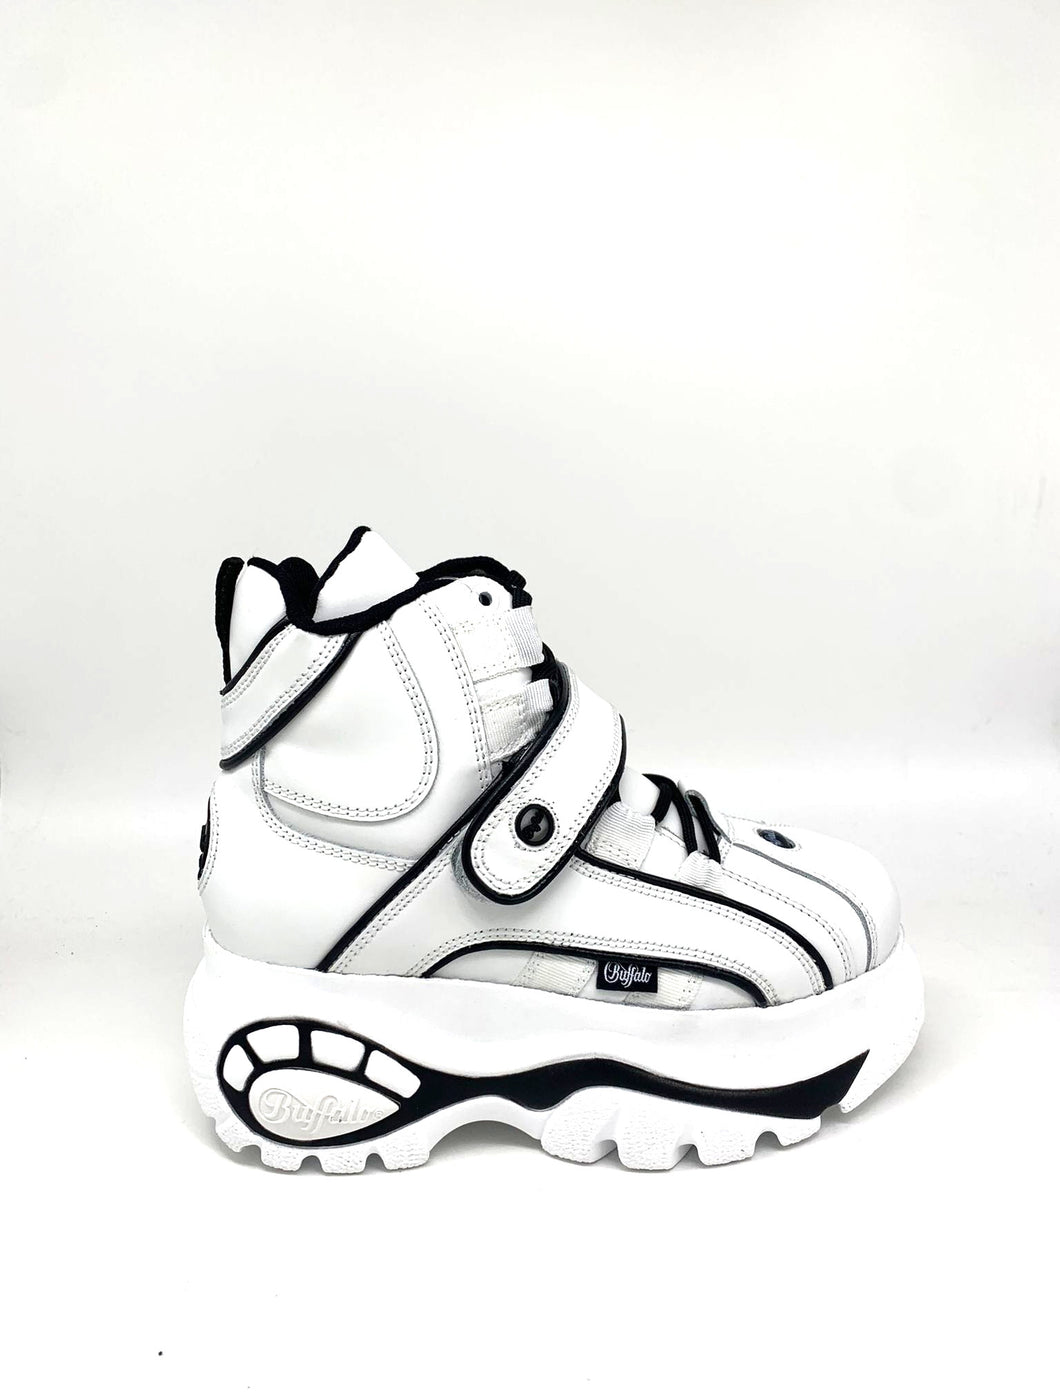 Buffalo London Classic Boots Shoes Platform Shoes 90s White/Black White Black 1348-14 2.0 (Limited by ModeRockCenter)